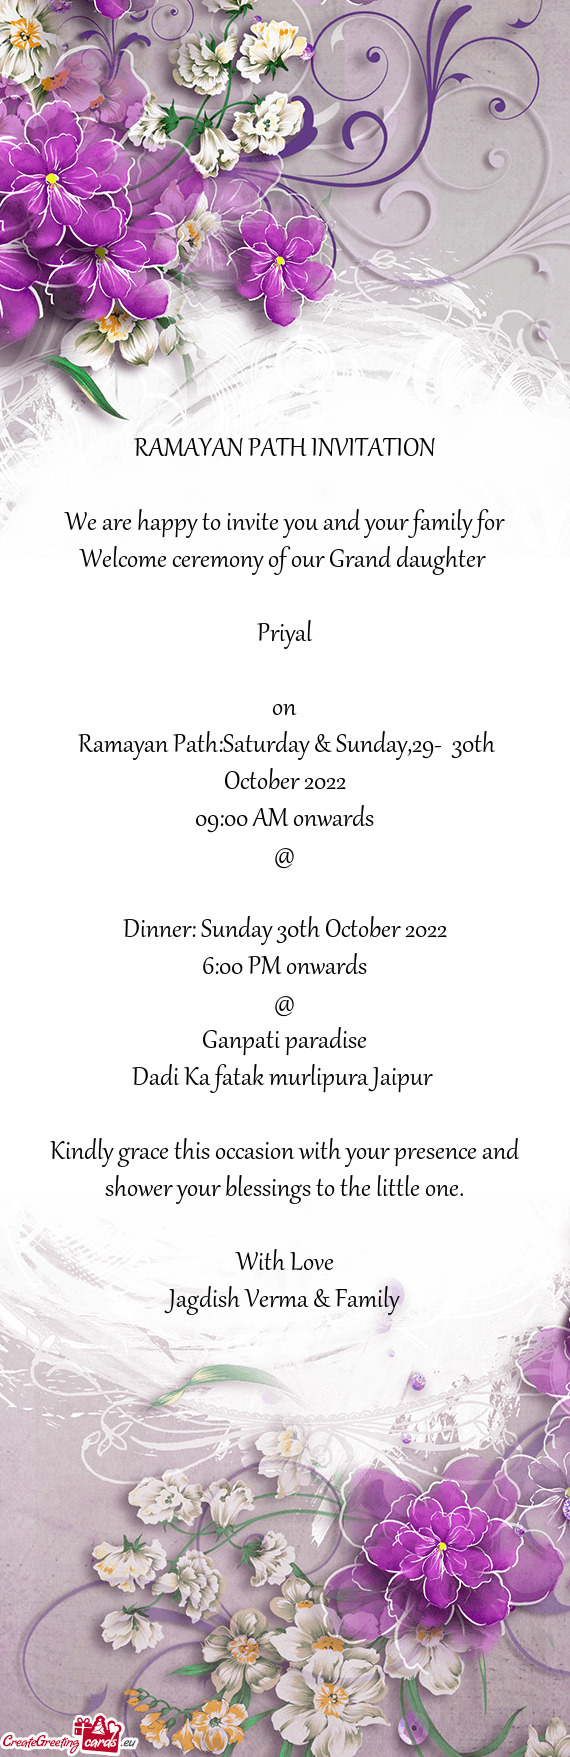 Ramayan Path:Saturday & Sunday,29- 30th October 2022